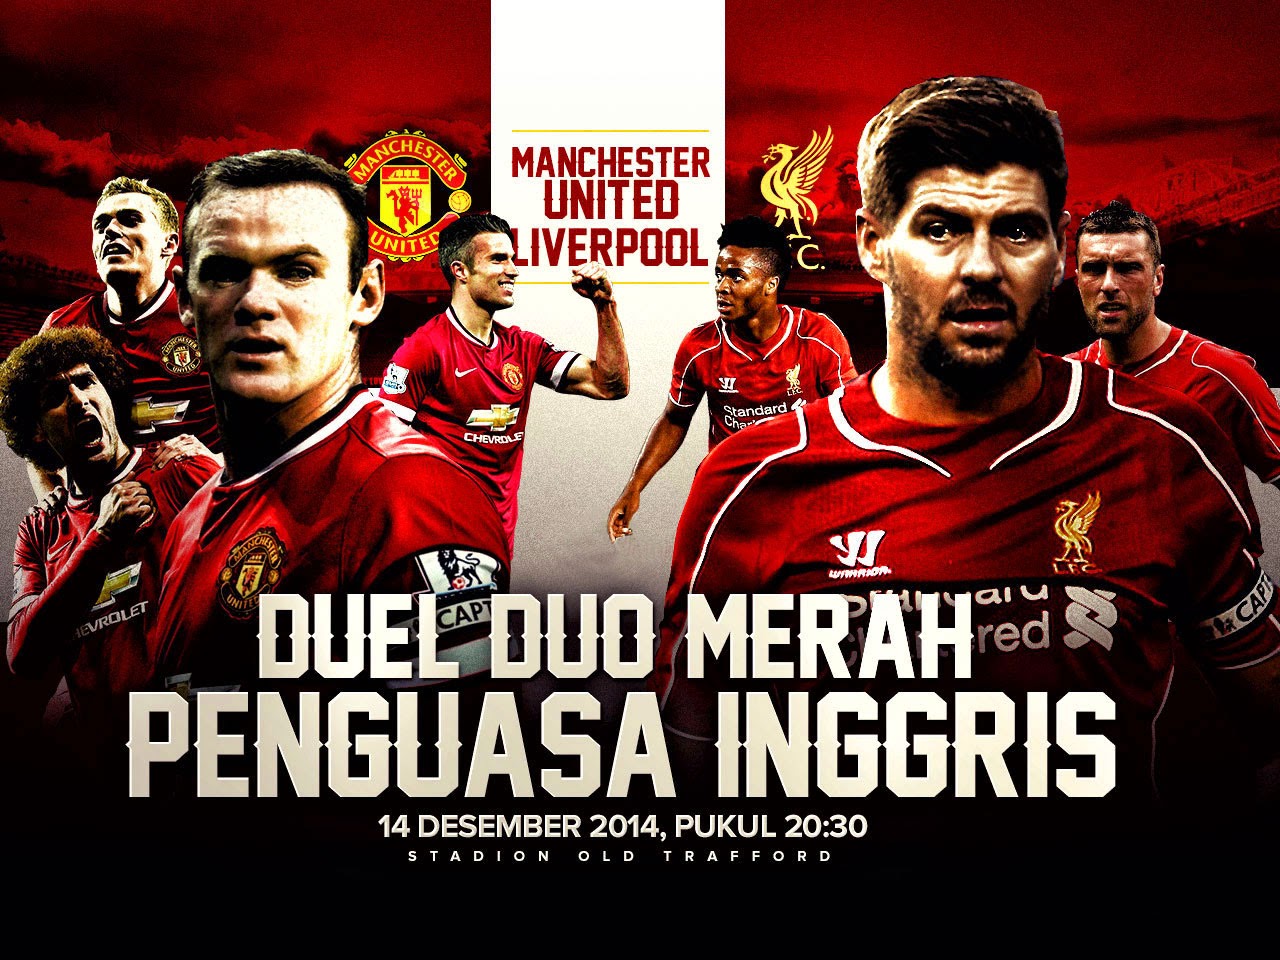 Manchester-United-VS-Liverpool